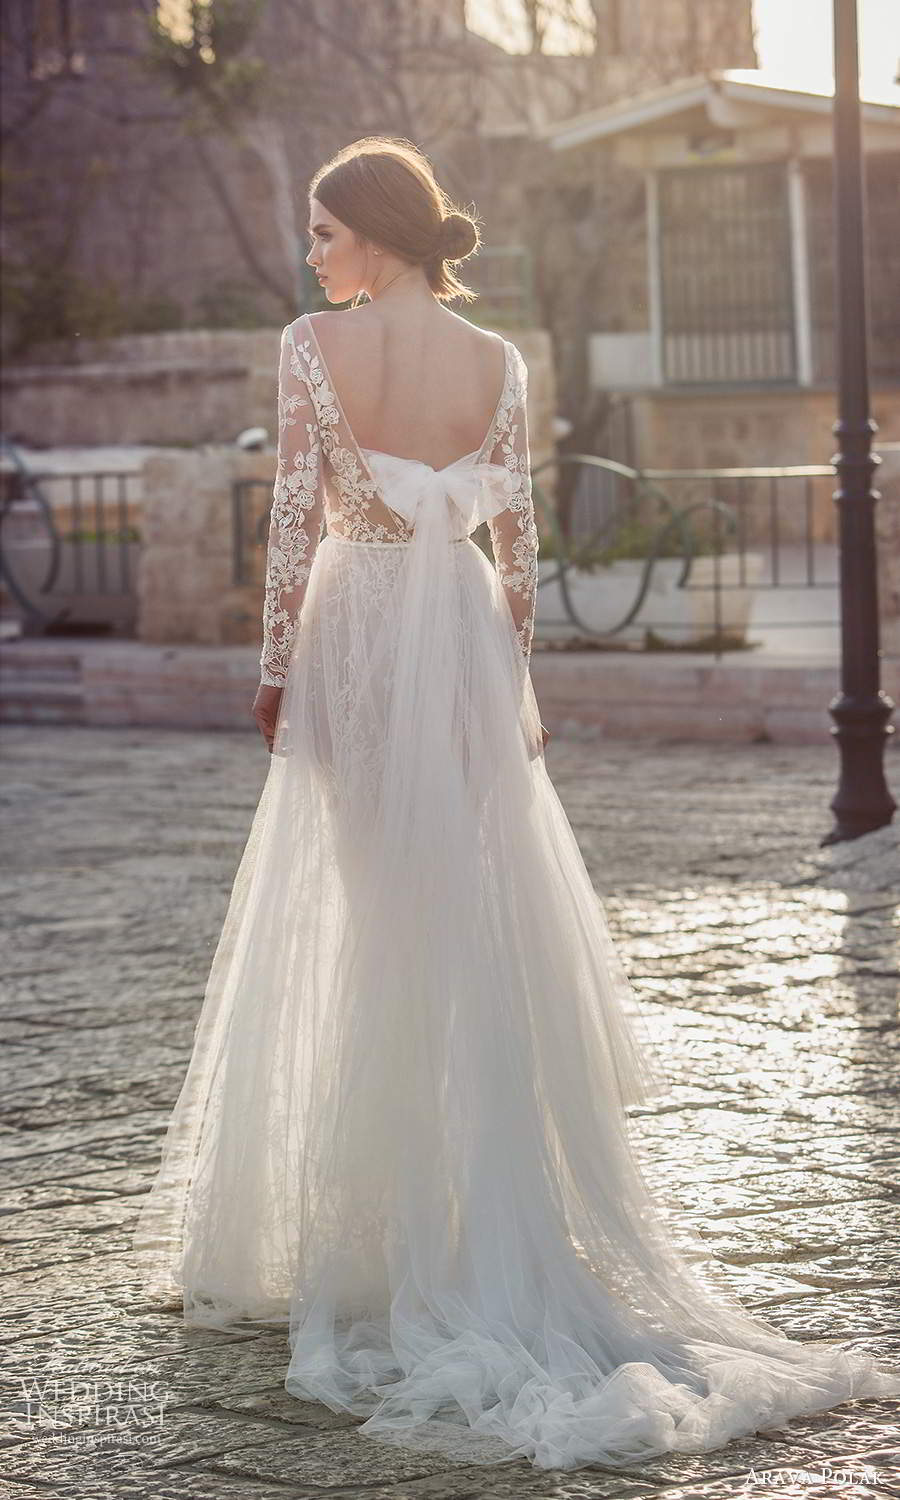 arava polak 2021 bridal sheer long sleeves bateau neckline fully embellished lace a line wedding dress slit skirt chapel train v back (4) bv